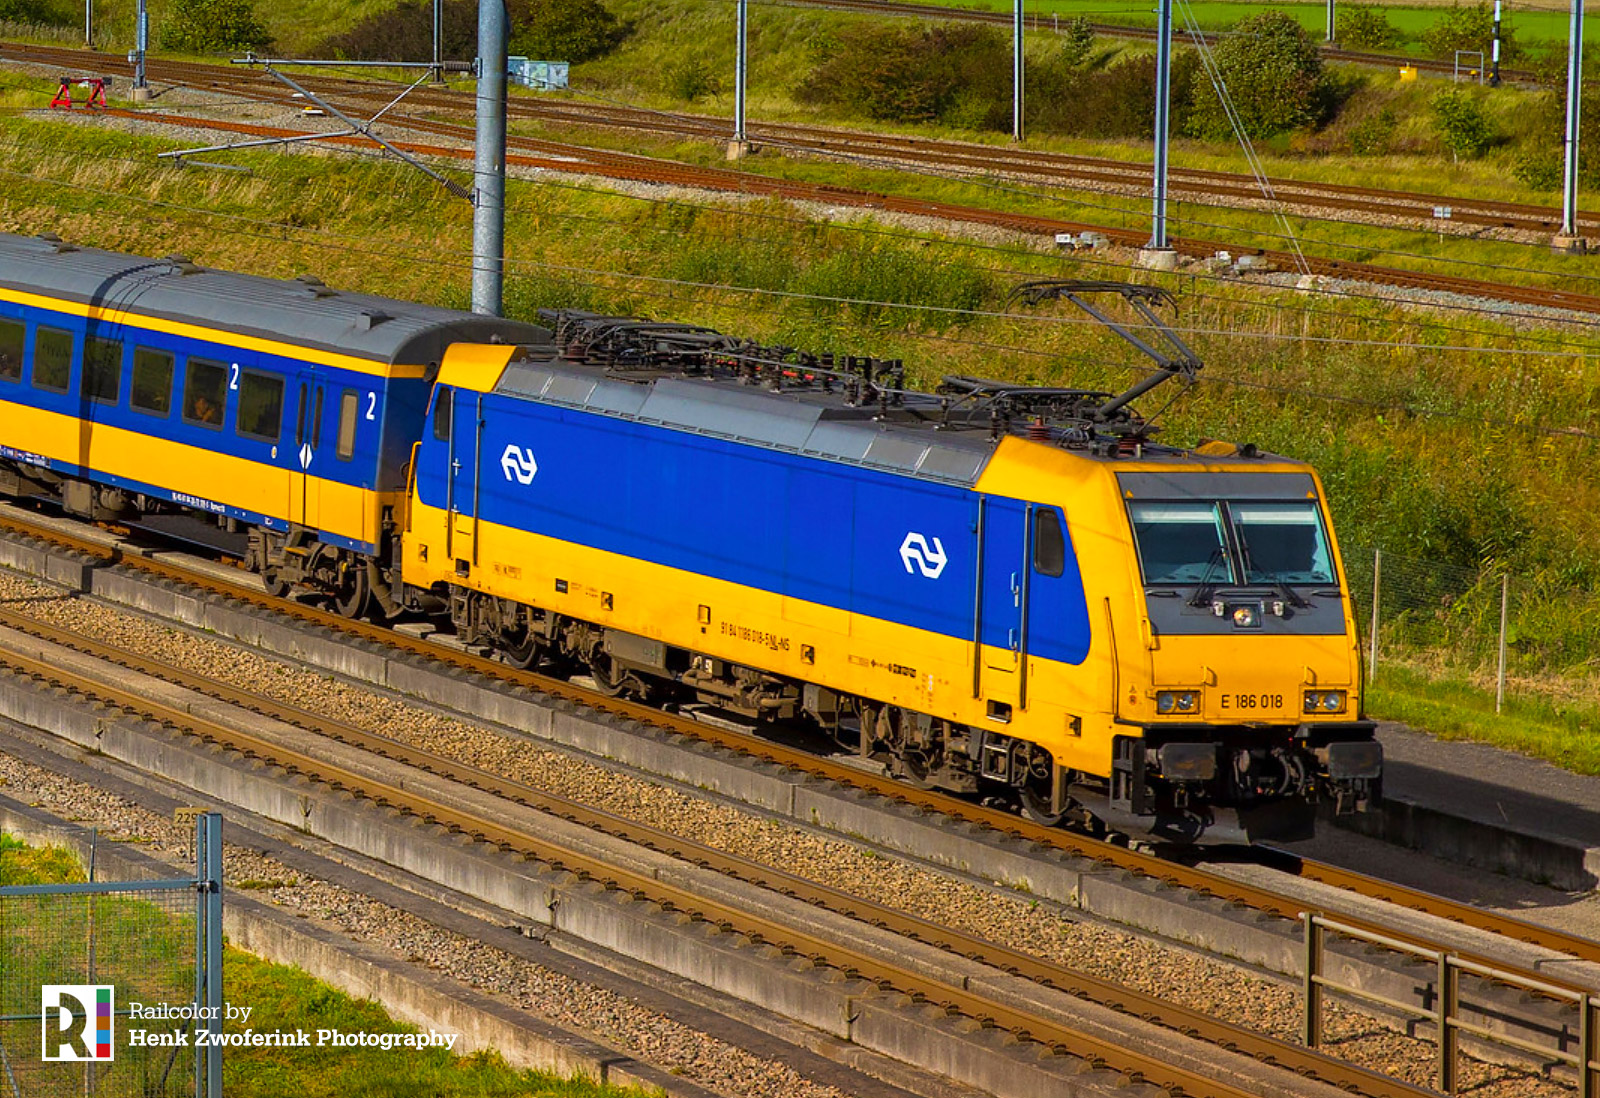 NL / Expert] Locomotives speed rails – Dutch needs to pay – Railcolor News